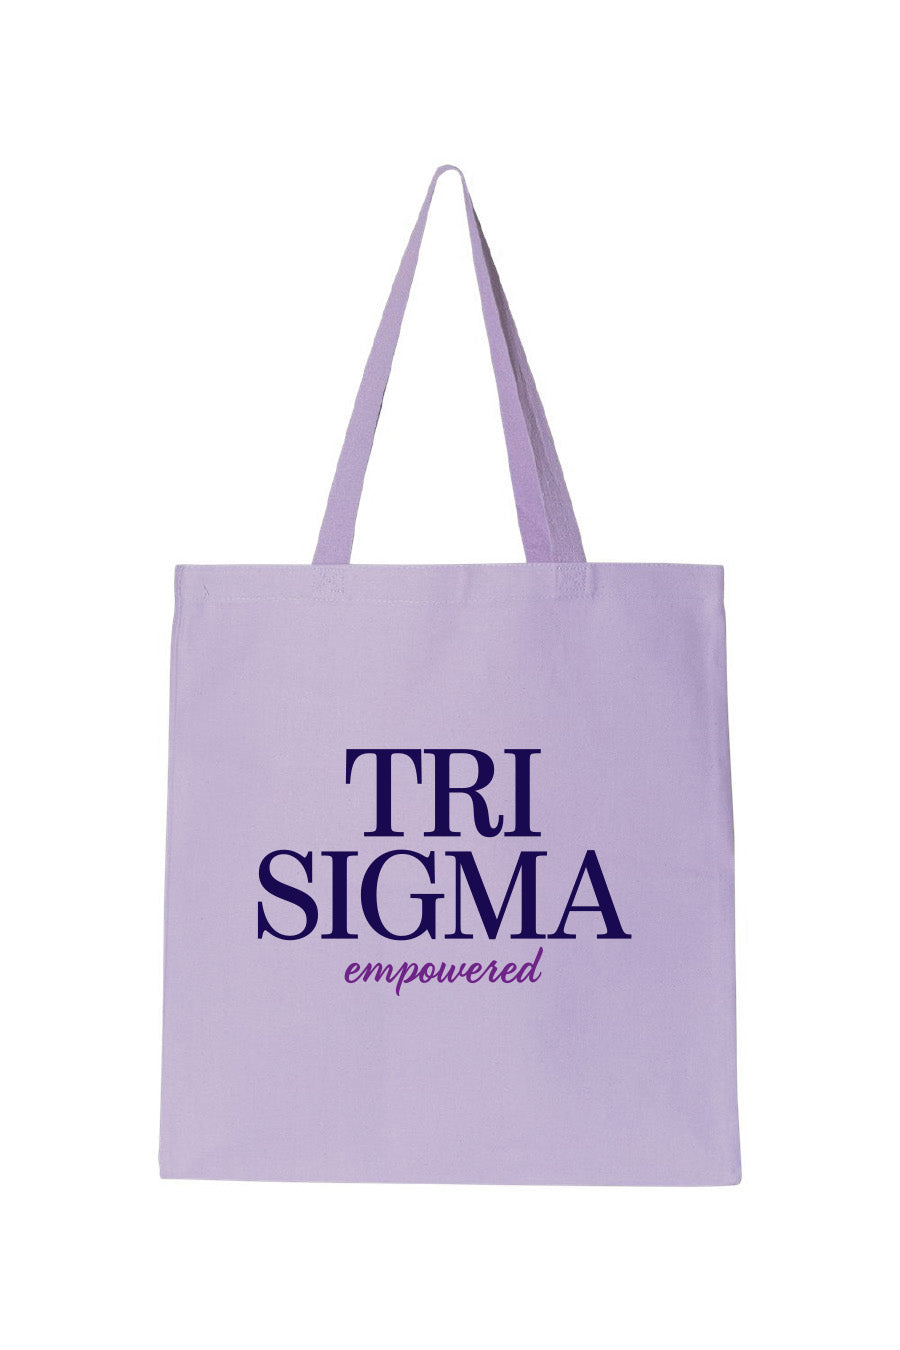 Tri Sigma Empowered Tote